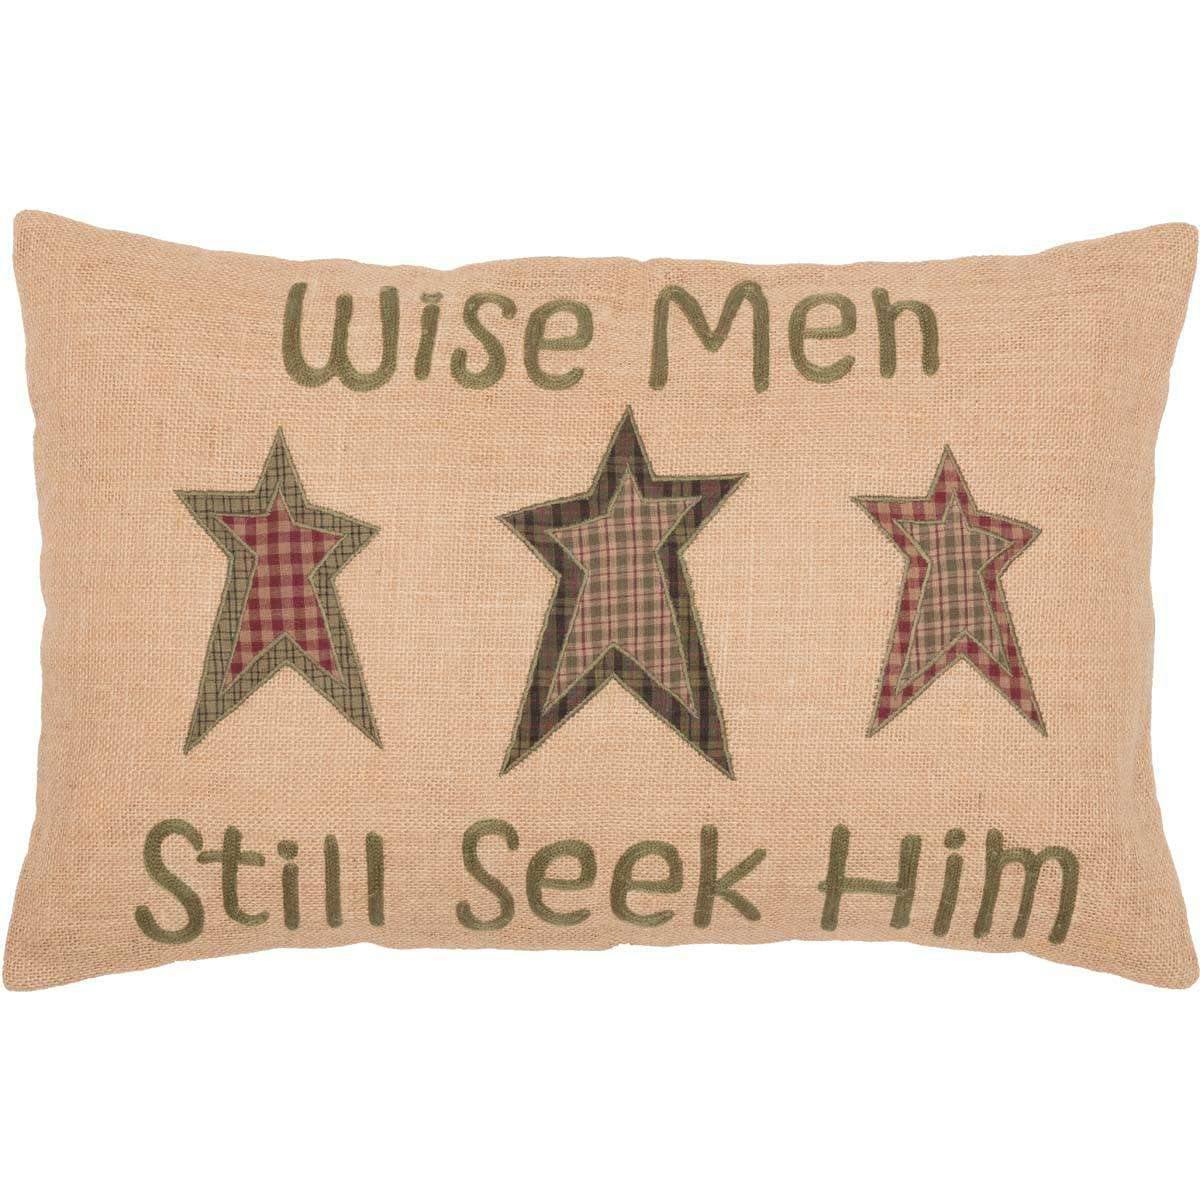 Wise Men Pillow 14x22 - The Fox Decor